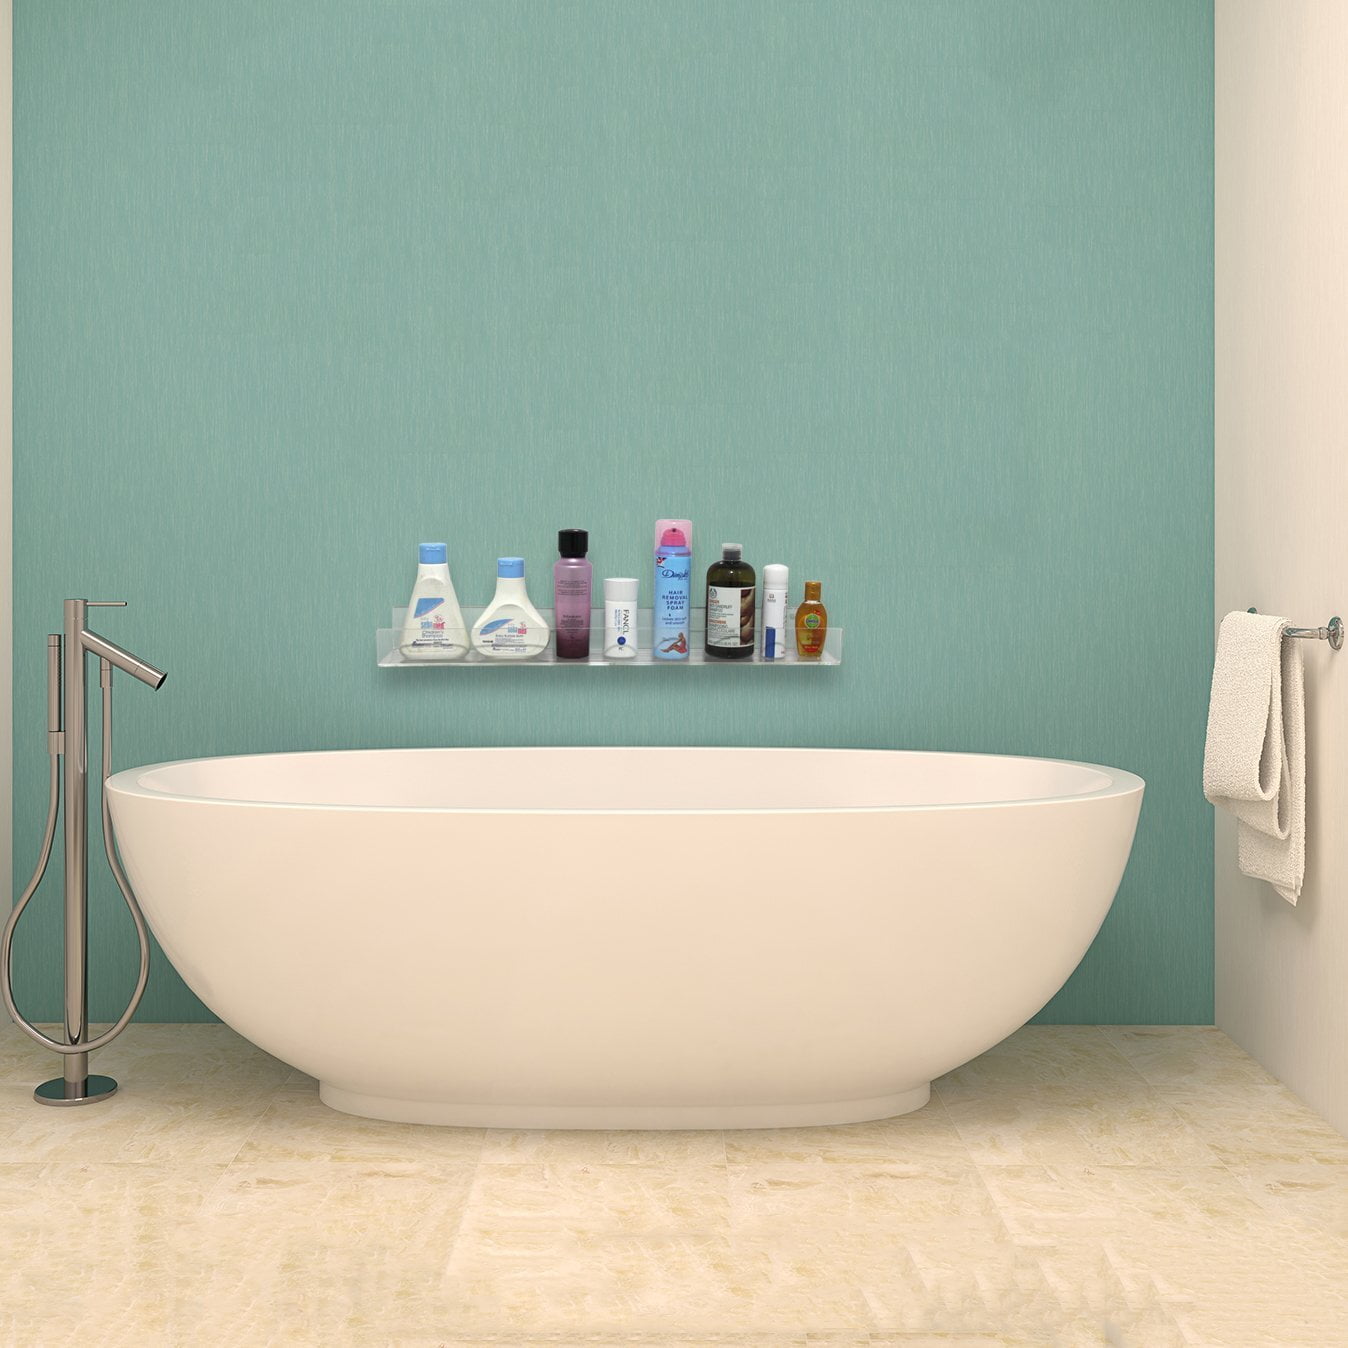 KLYWUN 2-Pack Acrylic Clear Shower Shelves,Adhesive Bathroom